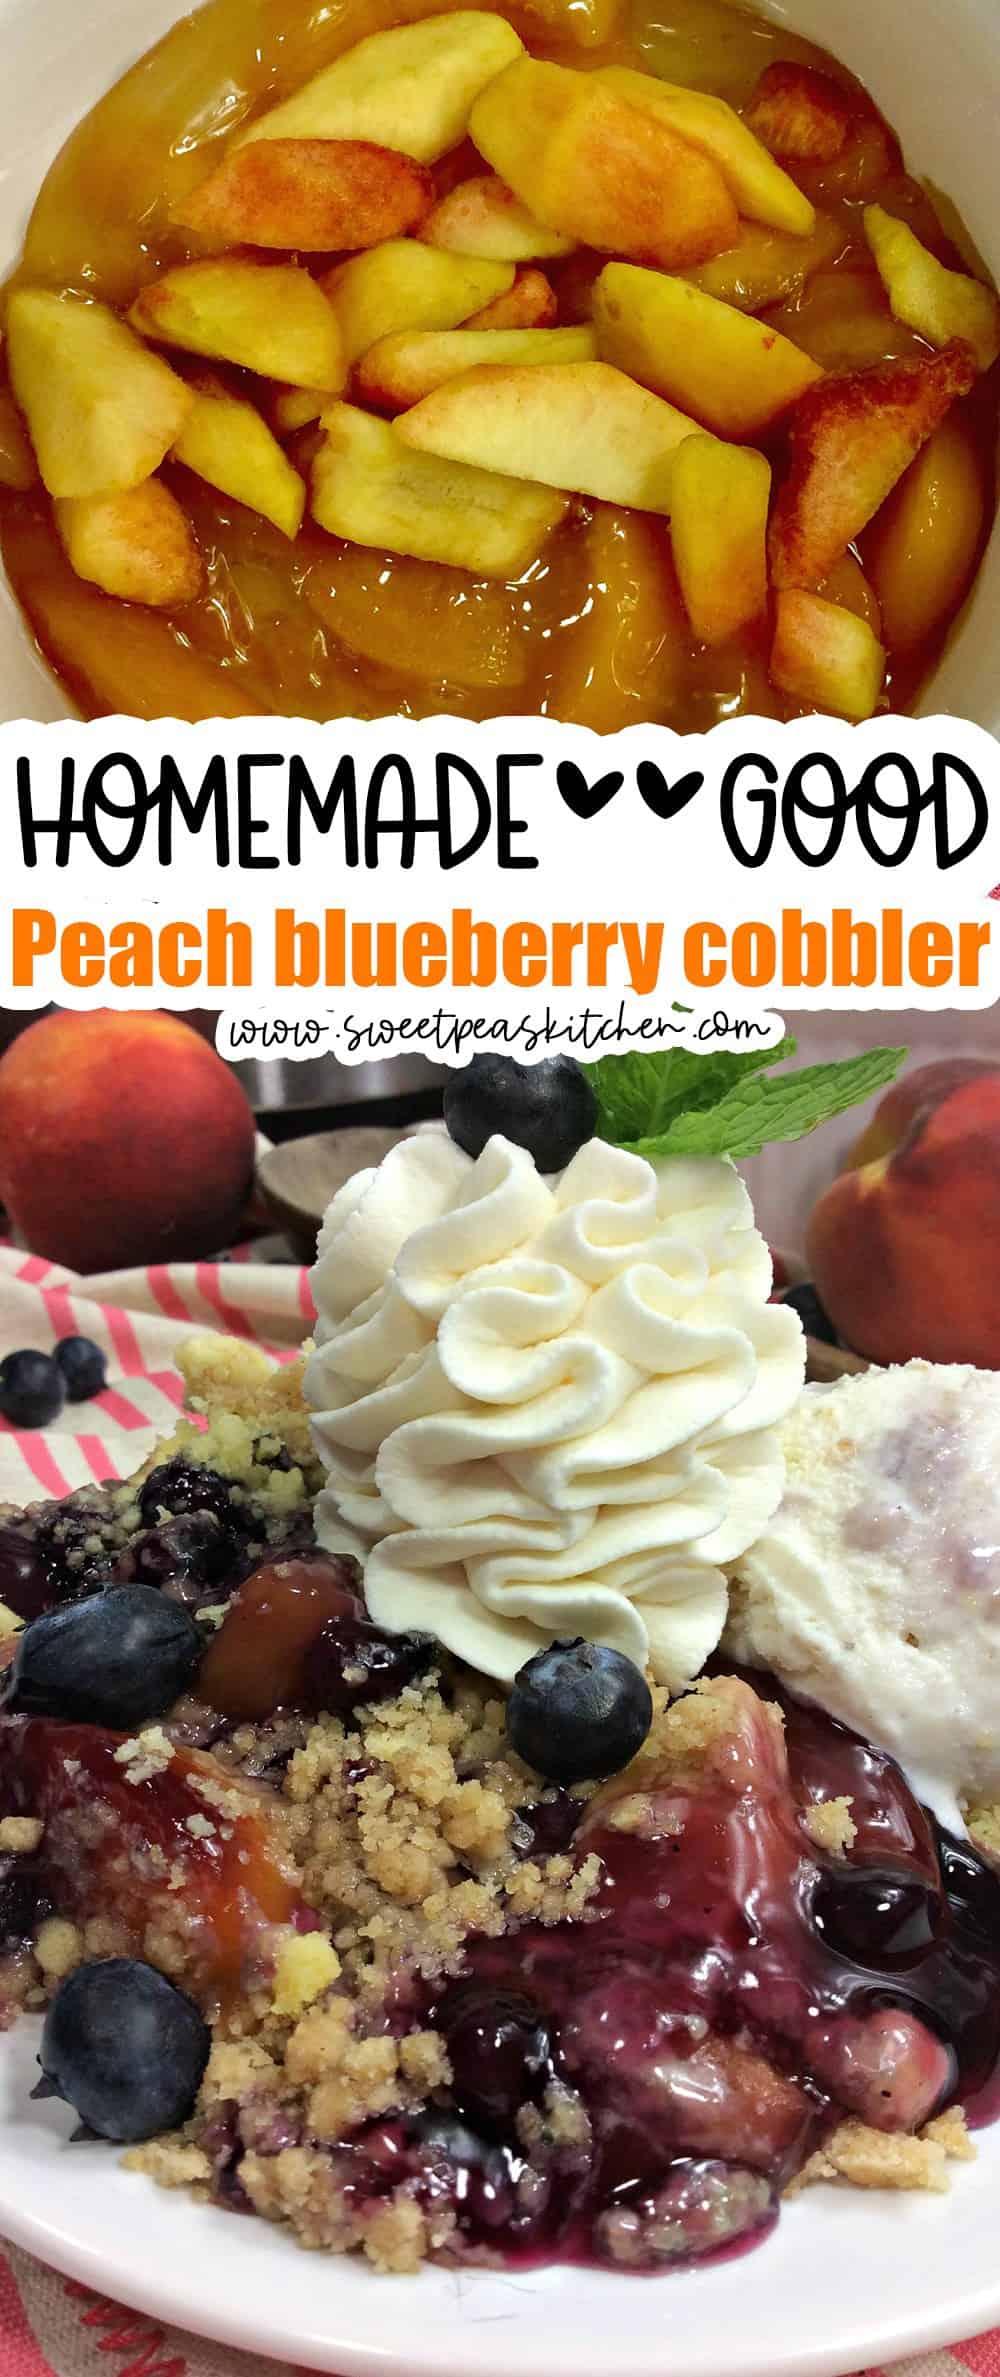 Peach blueberry cobbler